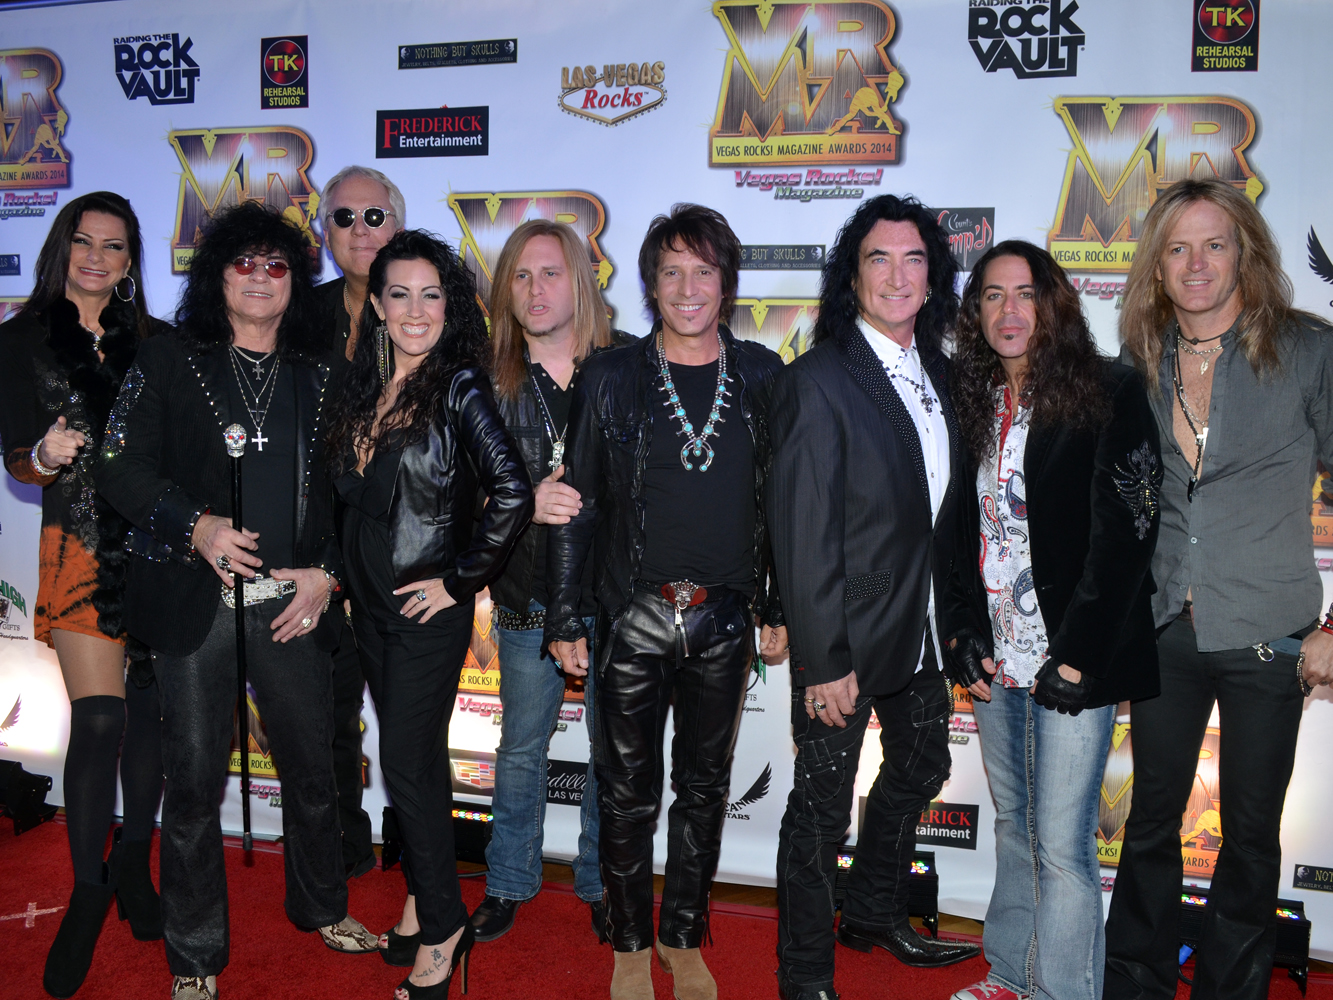 Raiding The Rock Vault - Vegas Rocks Magazine Music Awards 2014 photo credit Stephen Thorburn 63483